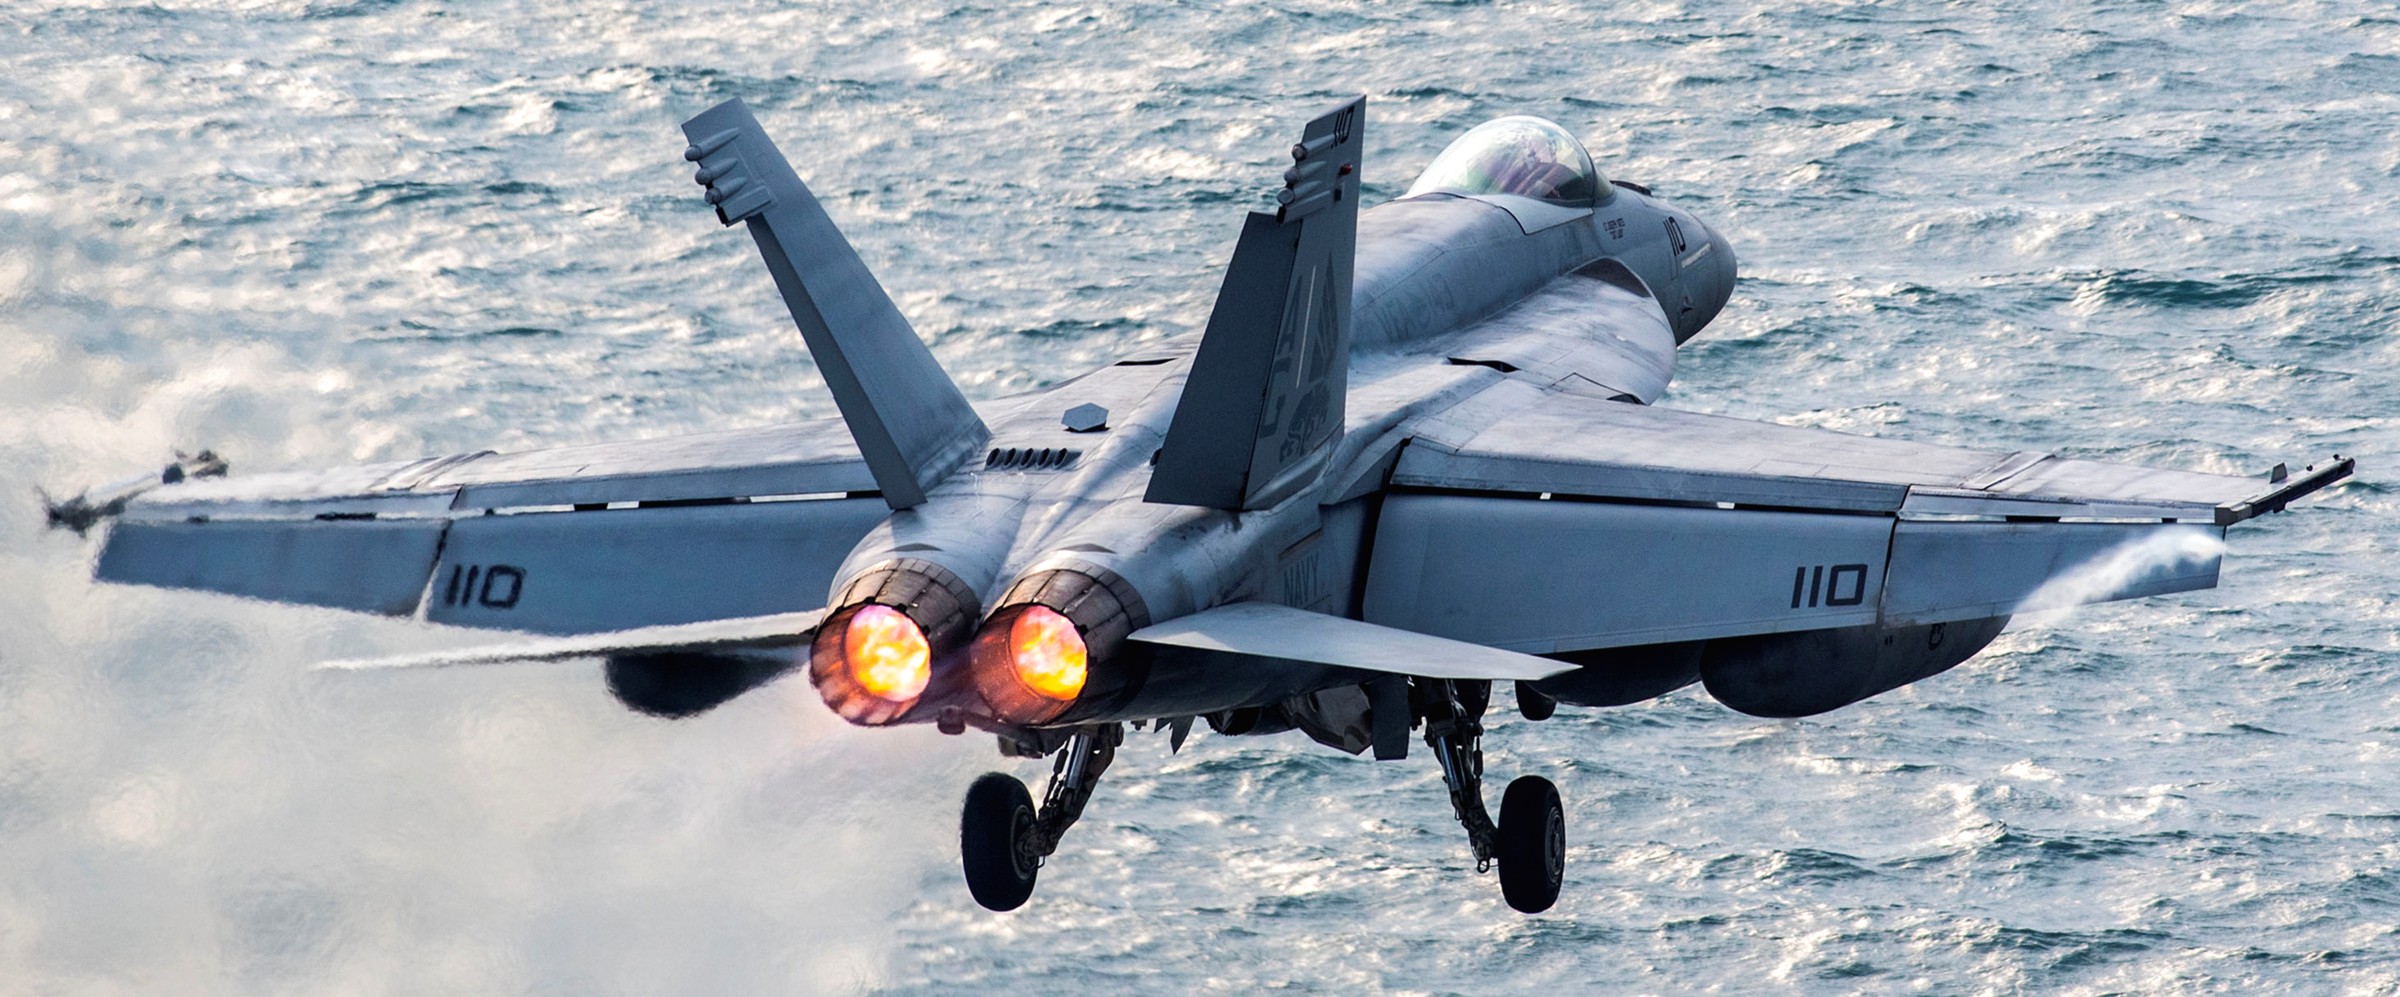 vfa-143 pukin dogs strike fighter squadron f/a-18e super hornet cvw-7 uss harry s. truman cvn-75 2015 08